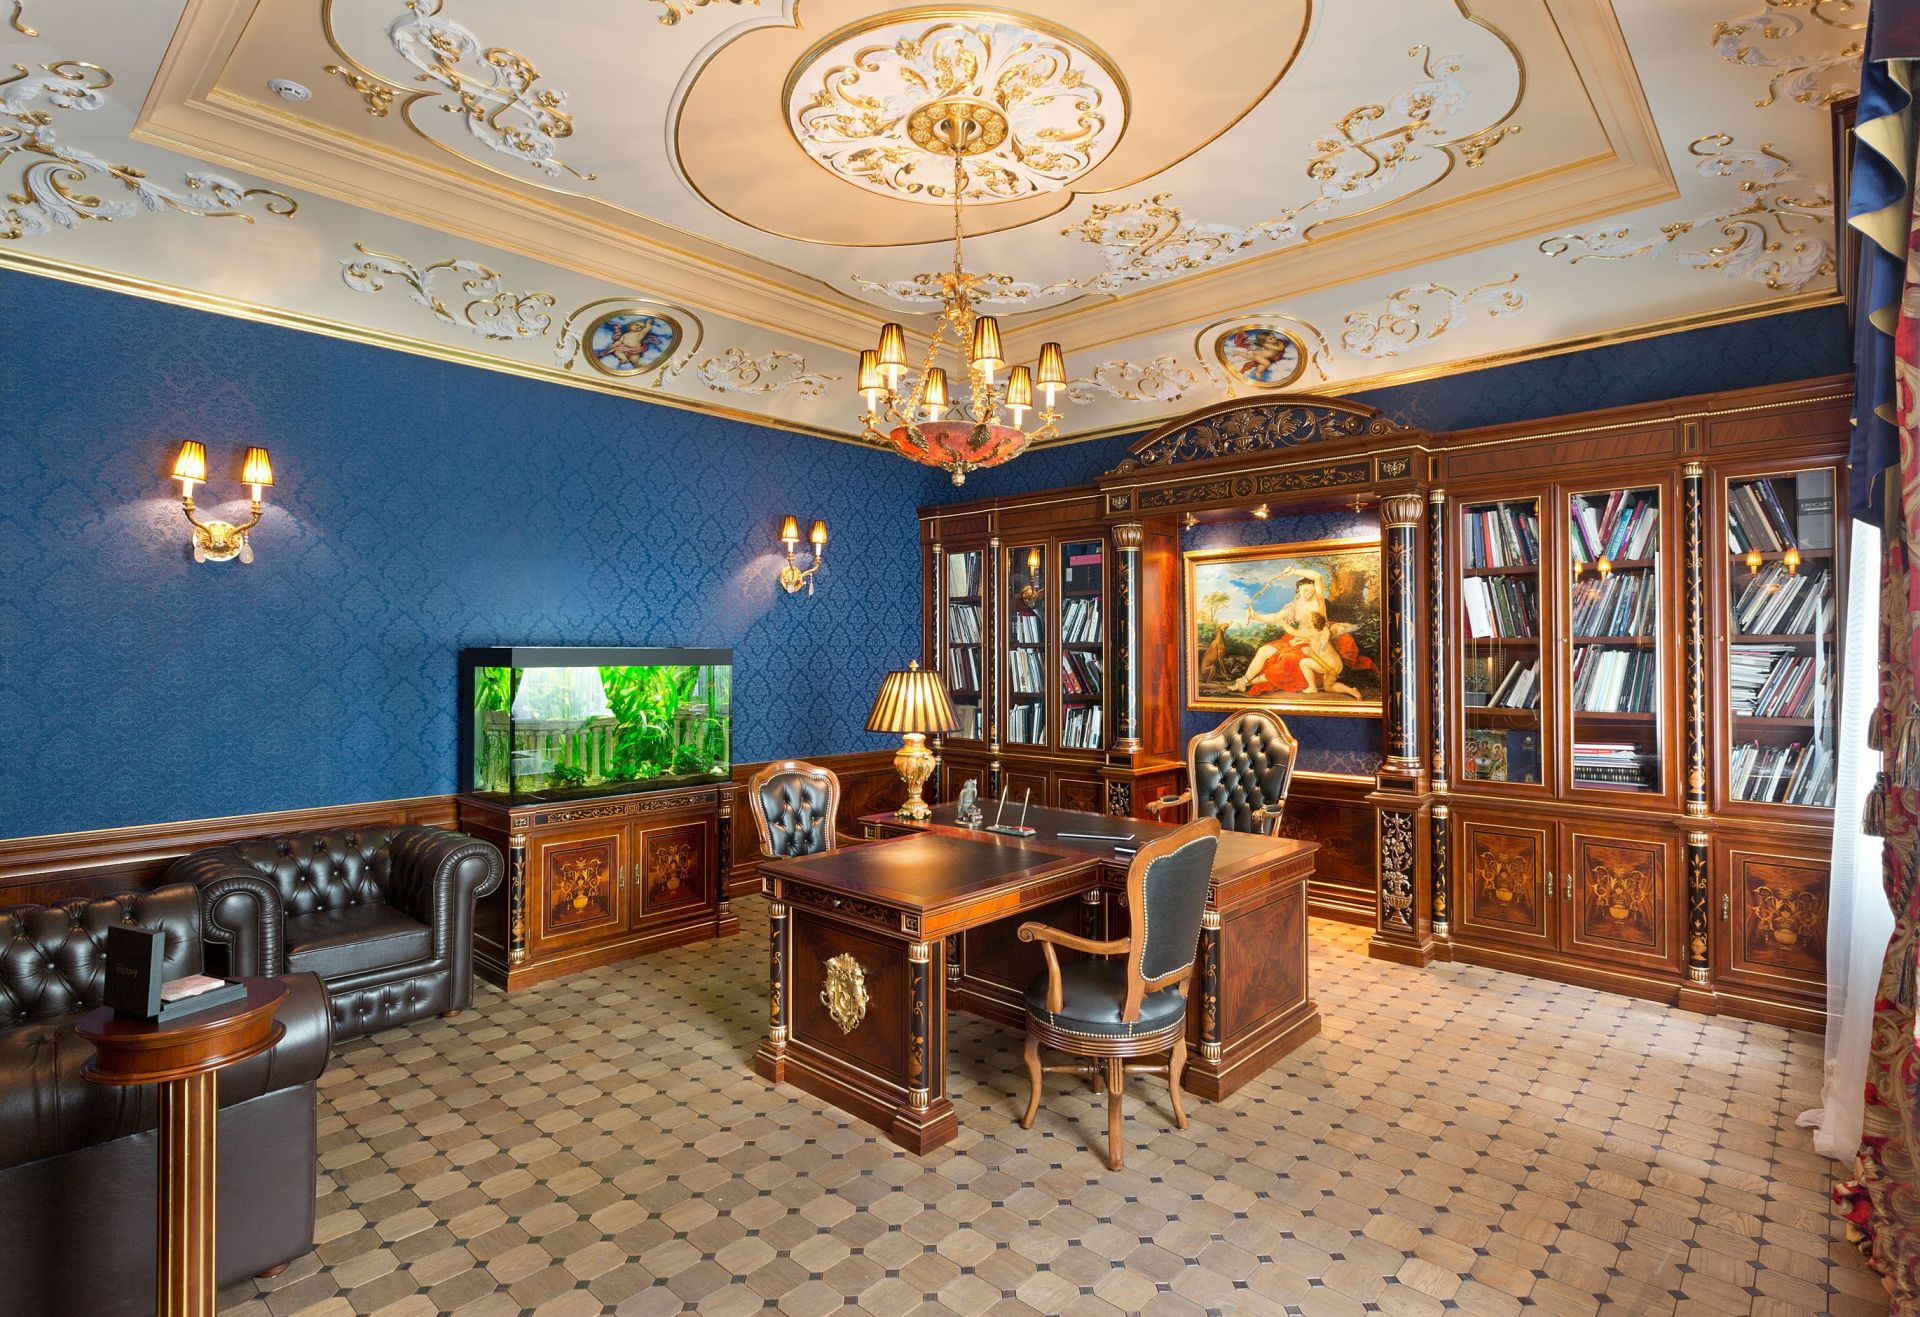 Design, Study interior with baroque elements